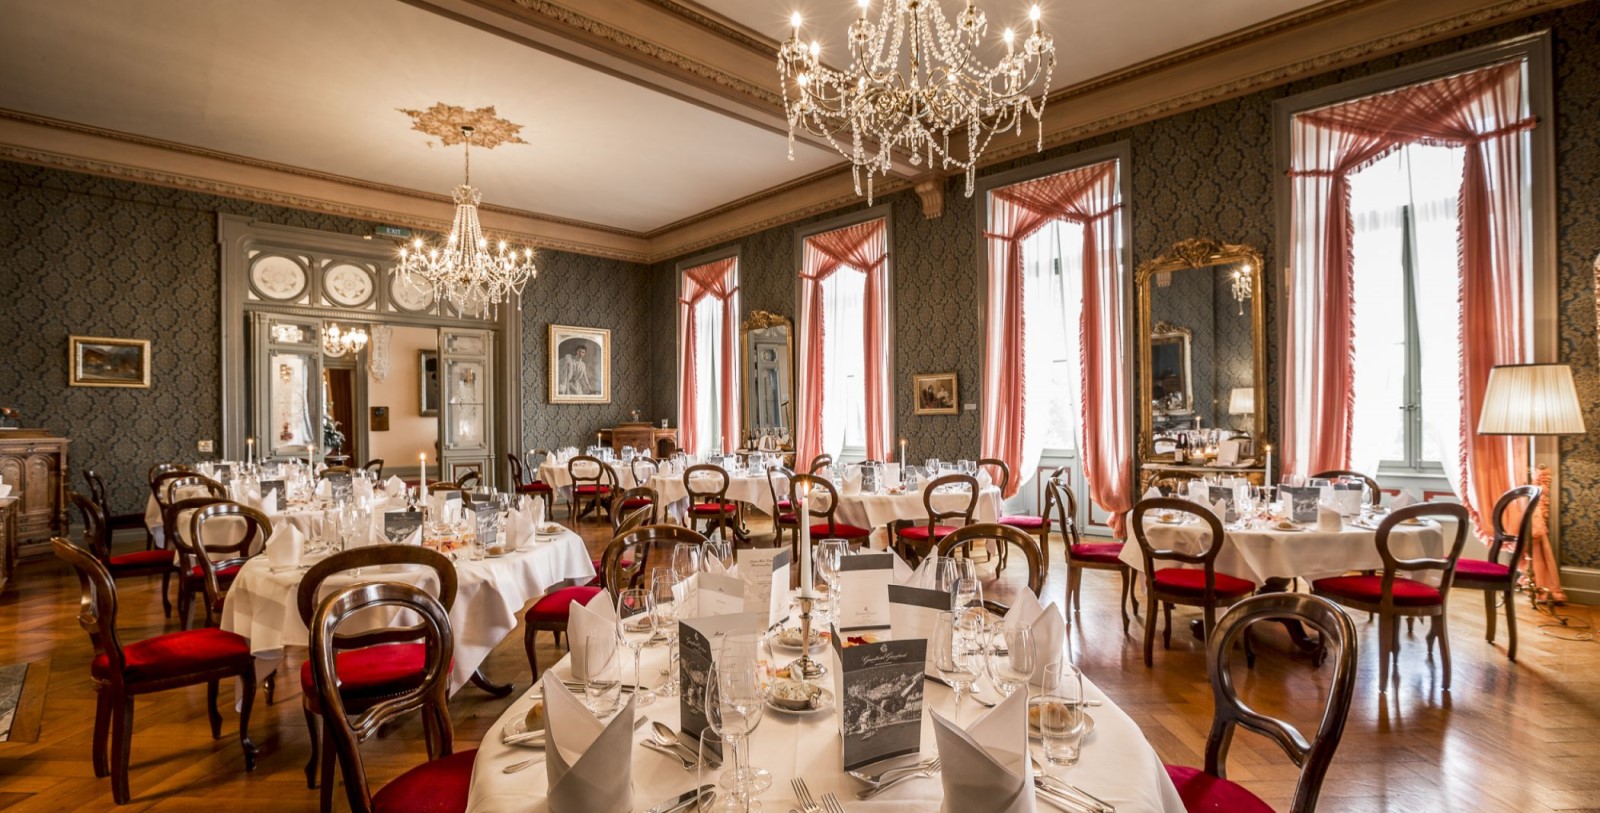 Image of Event Space, Grandhotel Giessbach, Brienz, Switzerland, 1822, Member of Historic Hotels Worldwide, Weddings